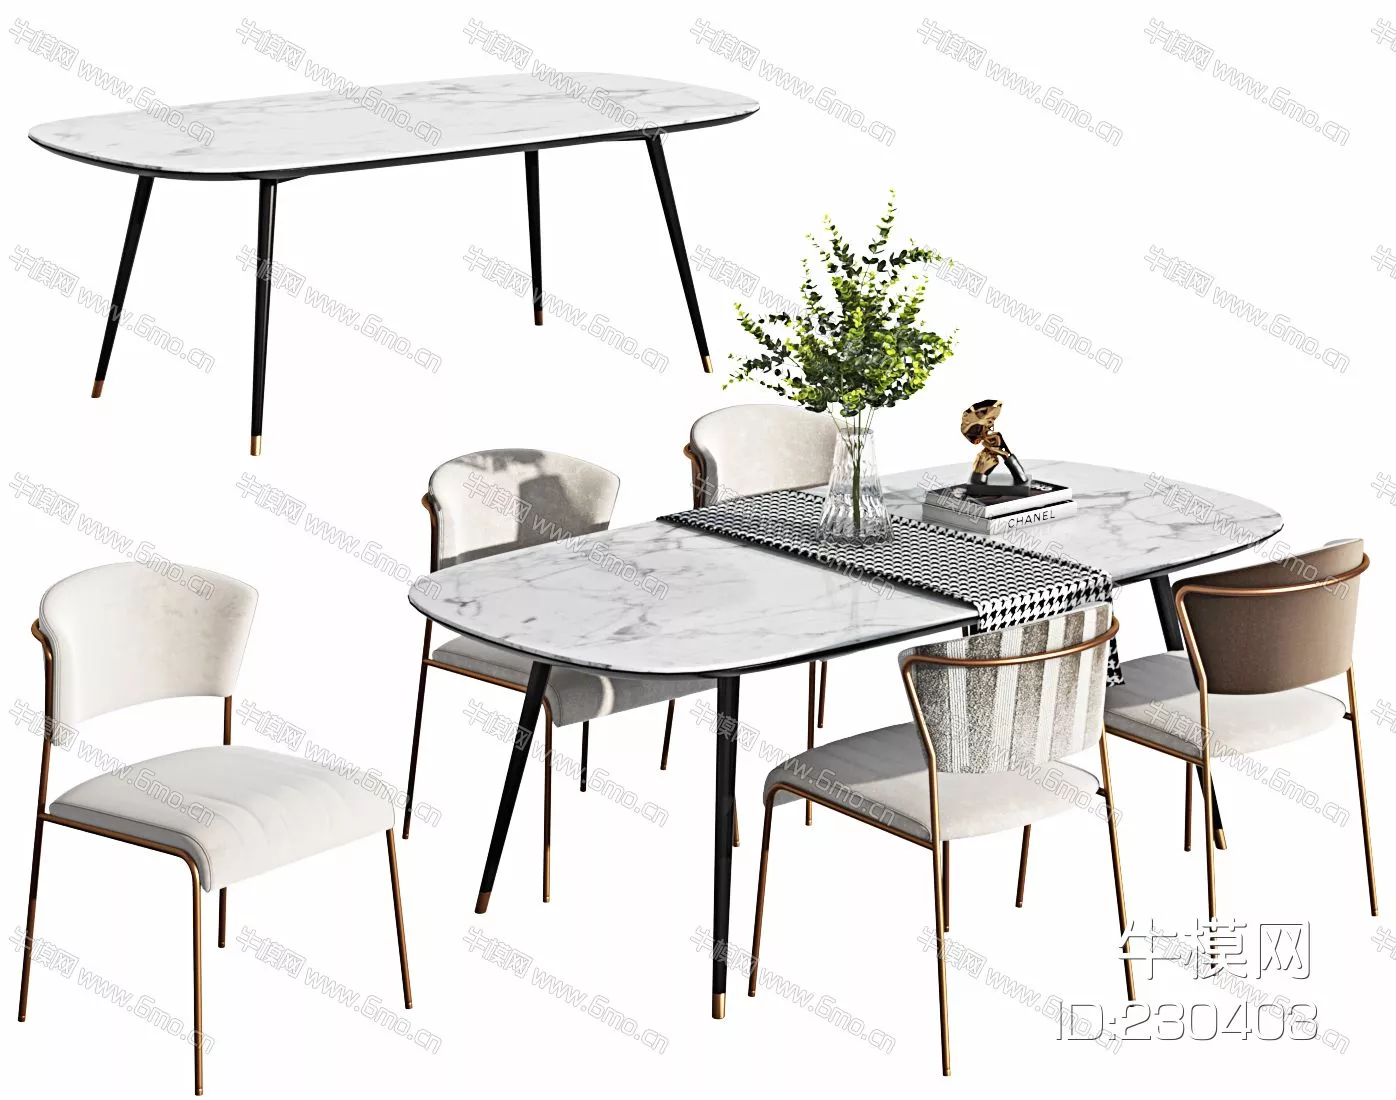 MODERN DINING TABLE SET - SKETCHUP 3D MODEL - VRAY - 230403